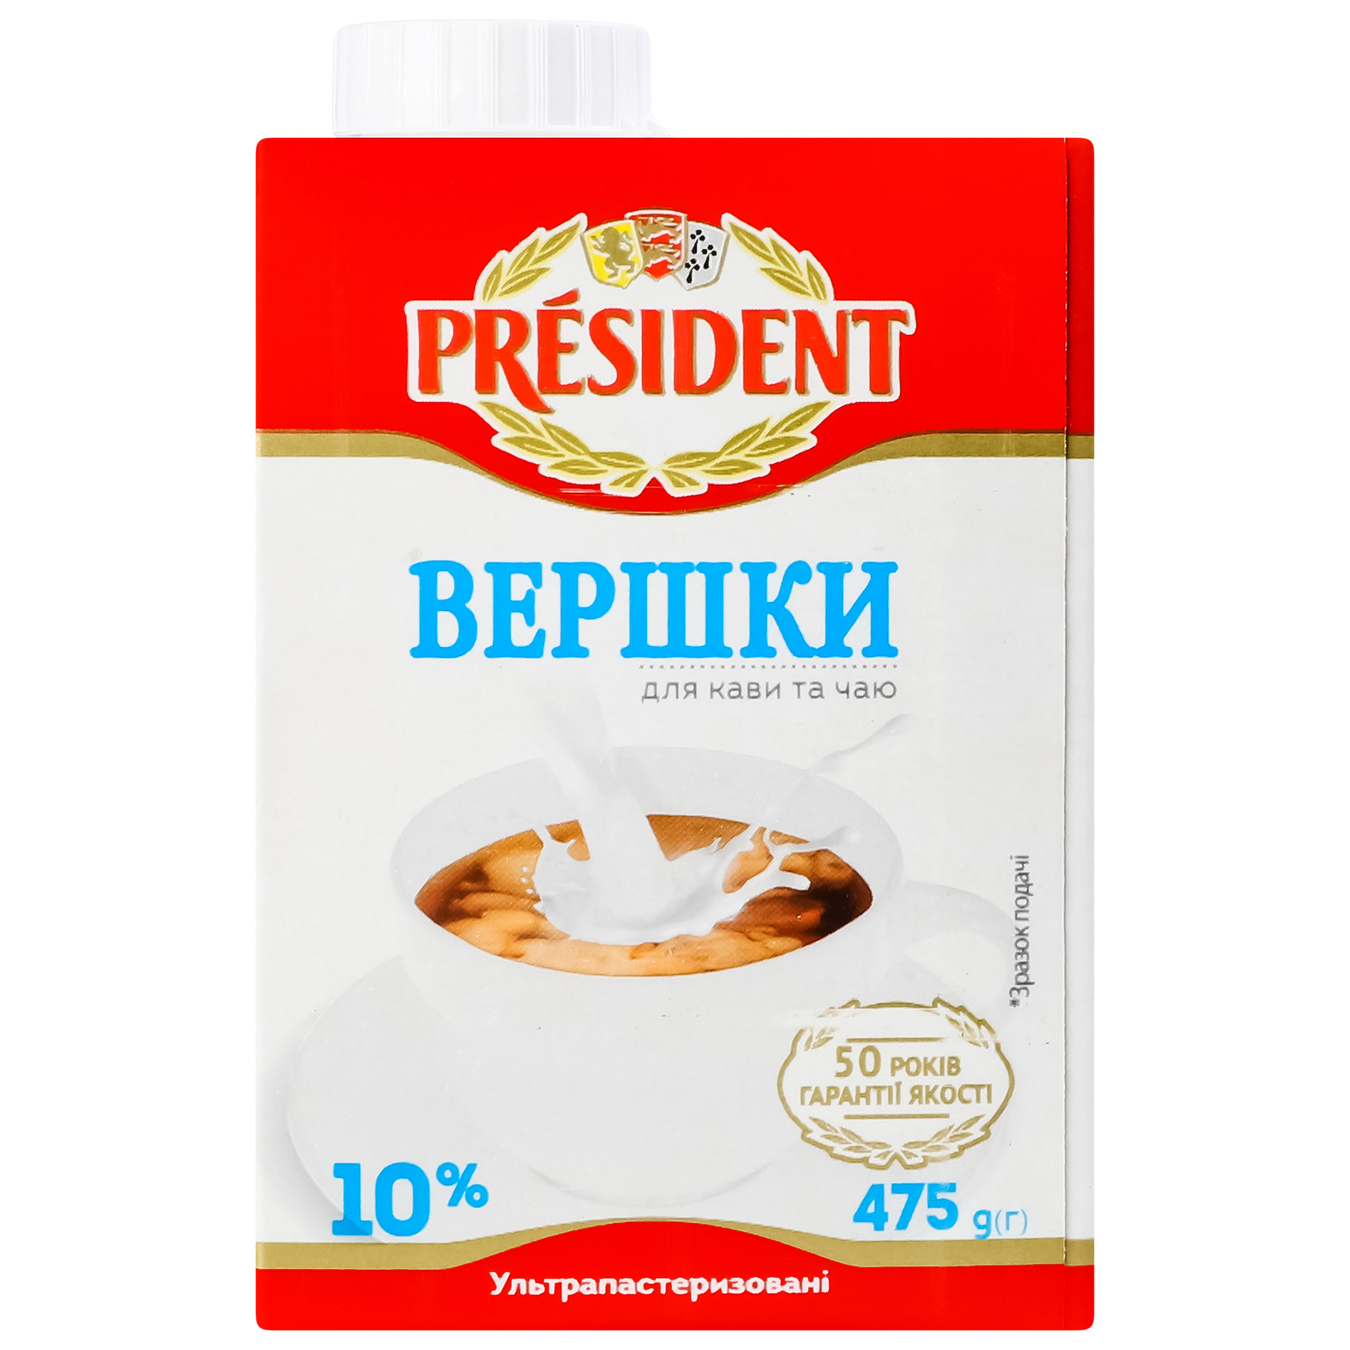 President ultra-pasteurized cream 10% 475g